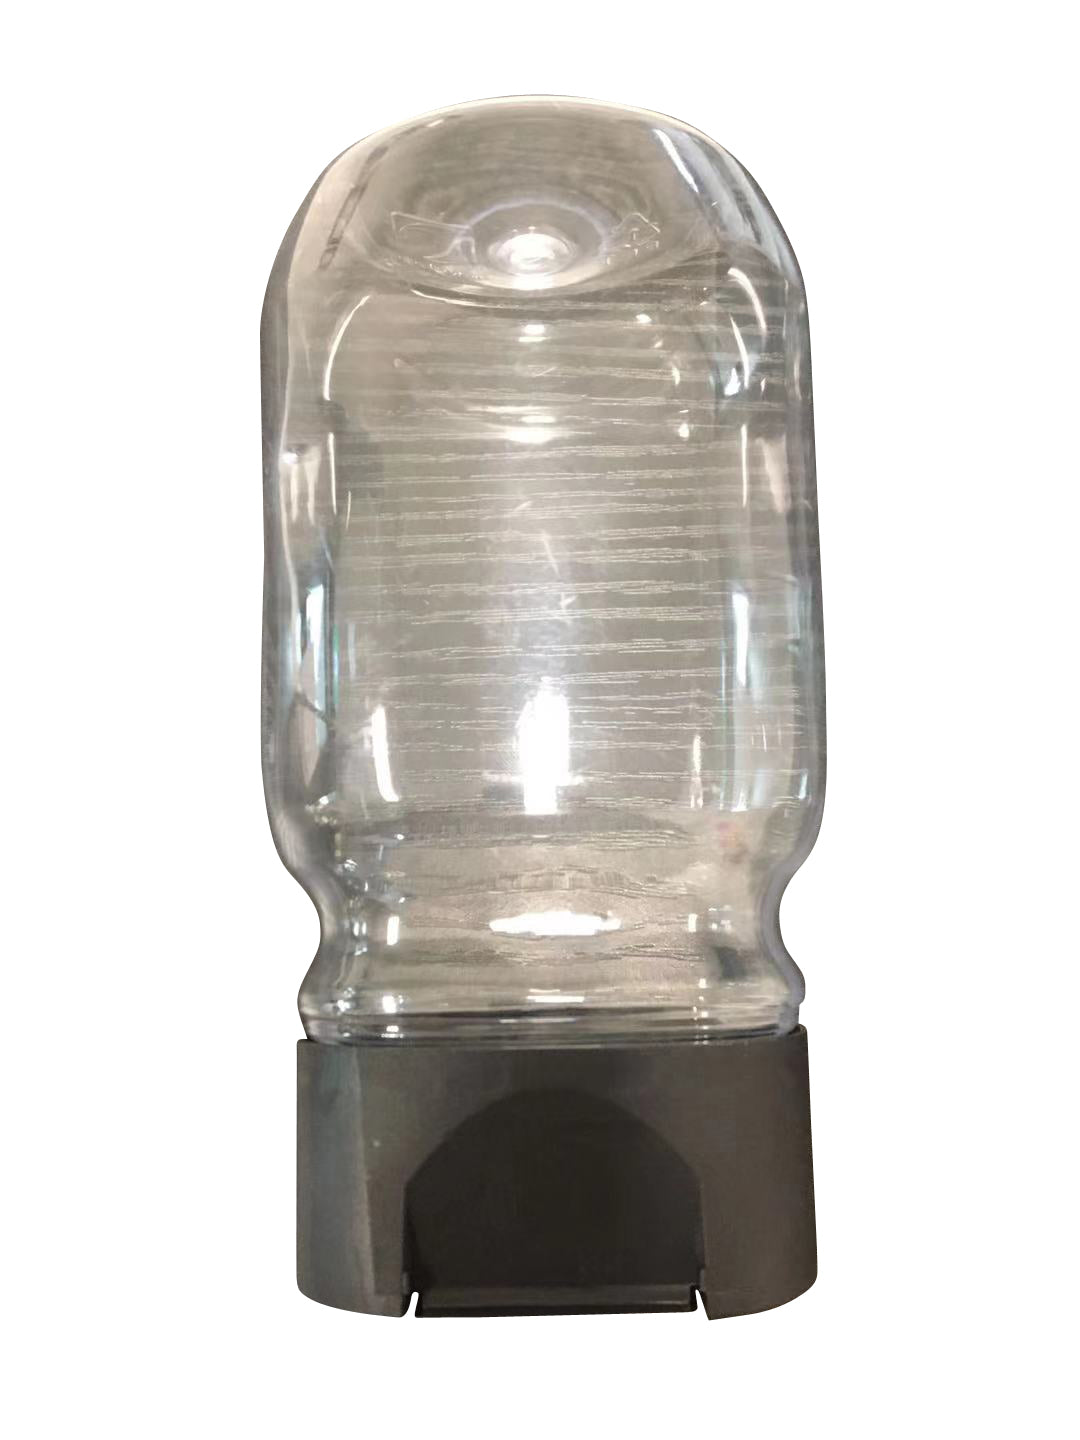 500g Honey Squeeze Bottle  - Carton of 320